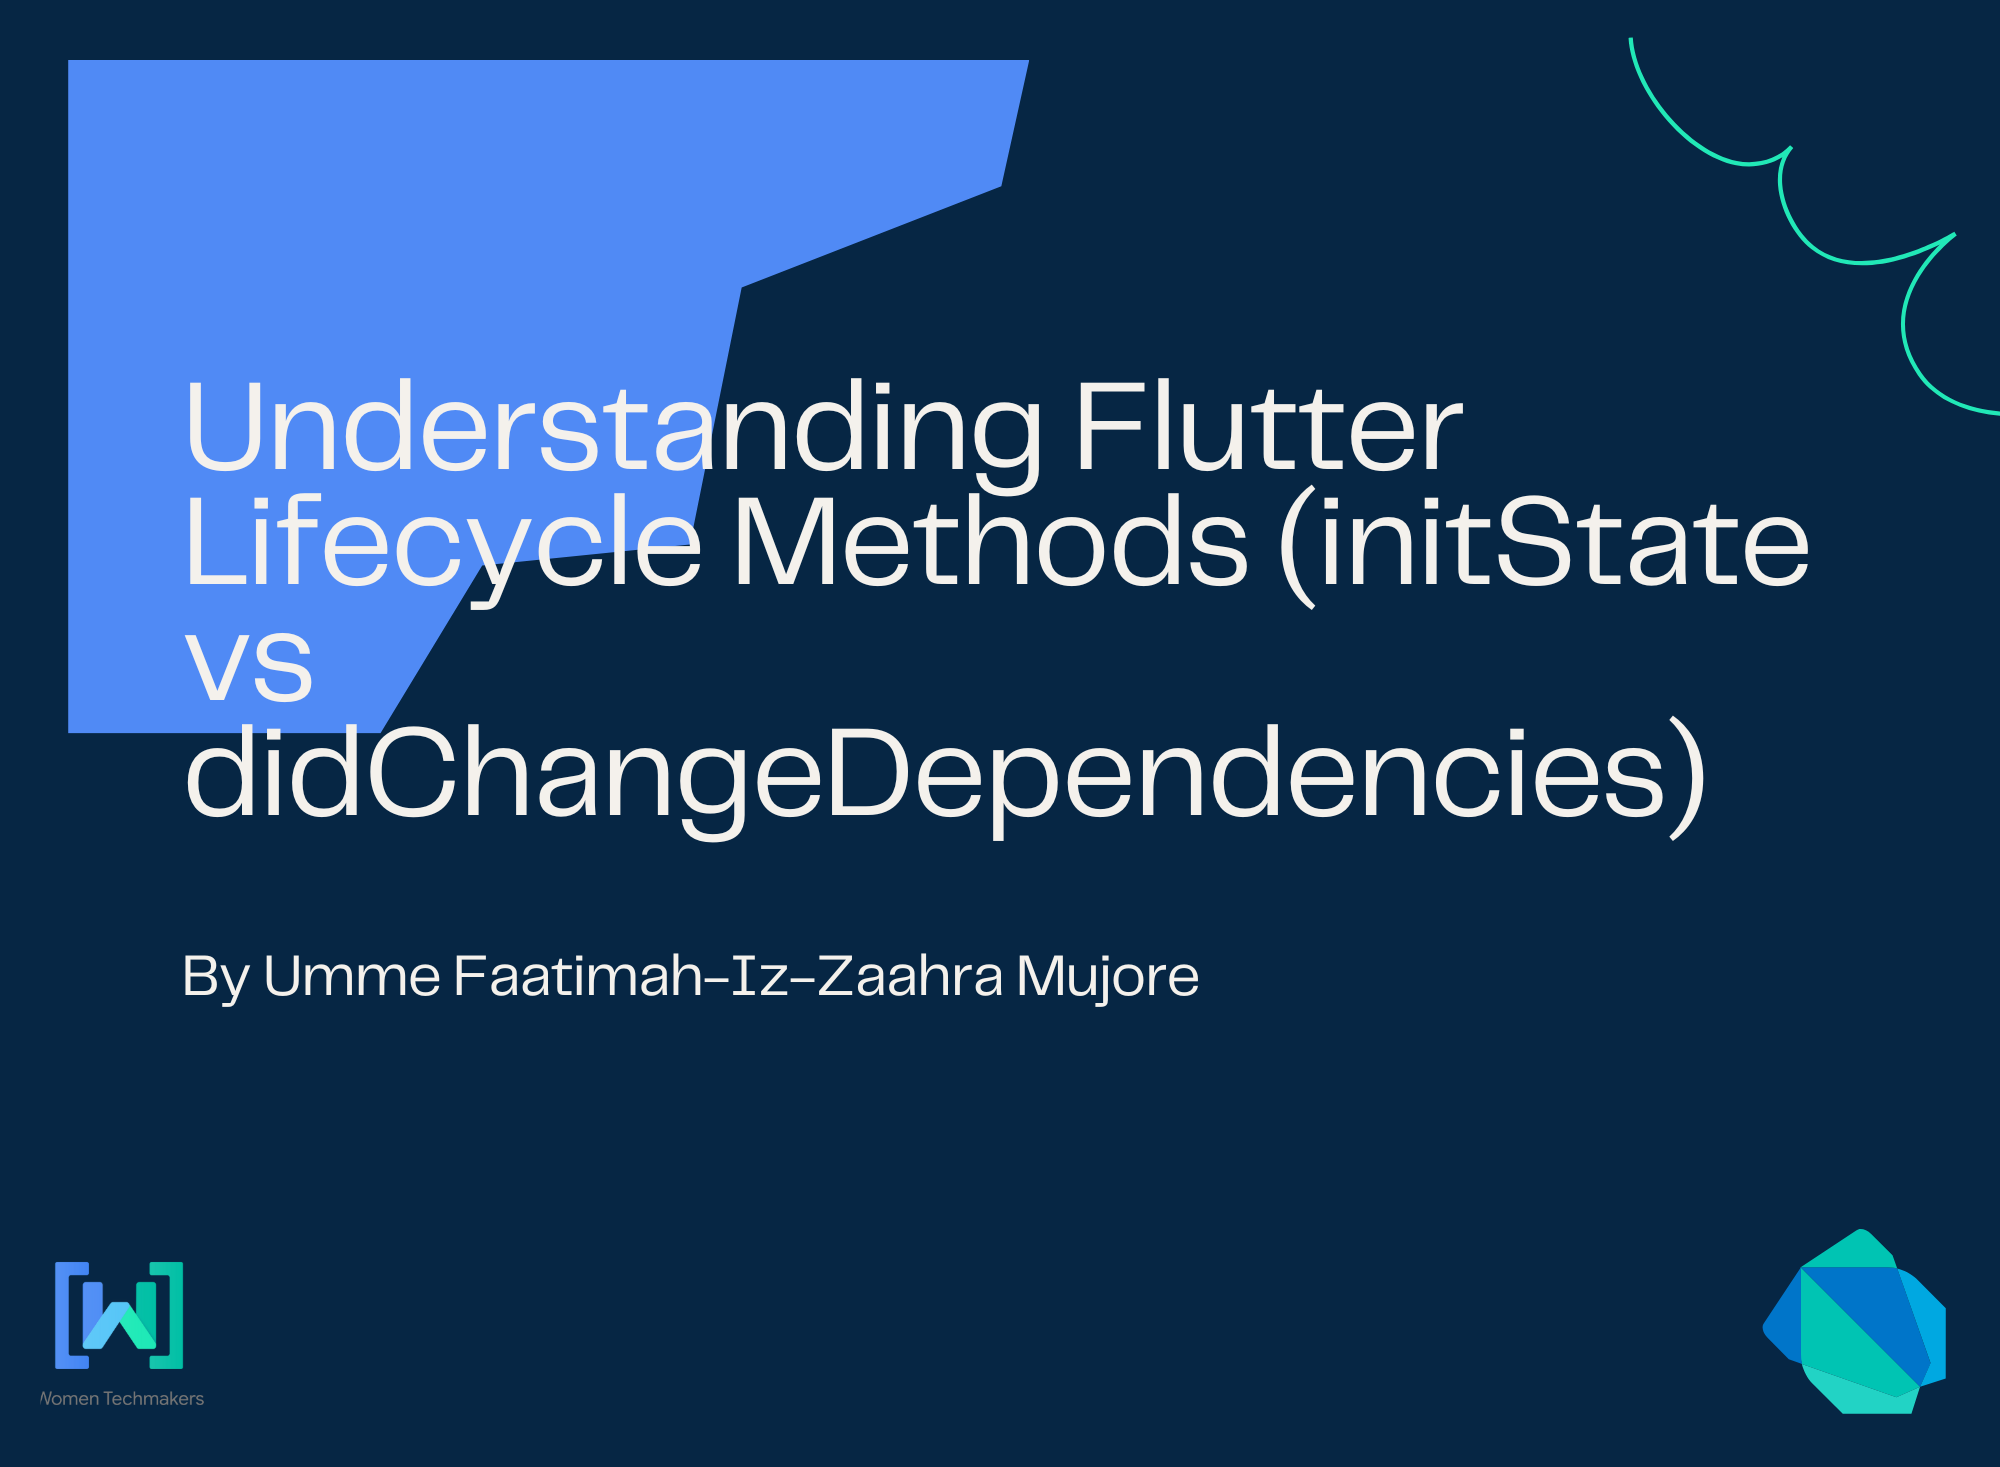 [Flutter] initState v/s didChangeDependencies methods